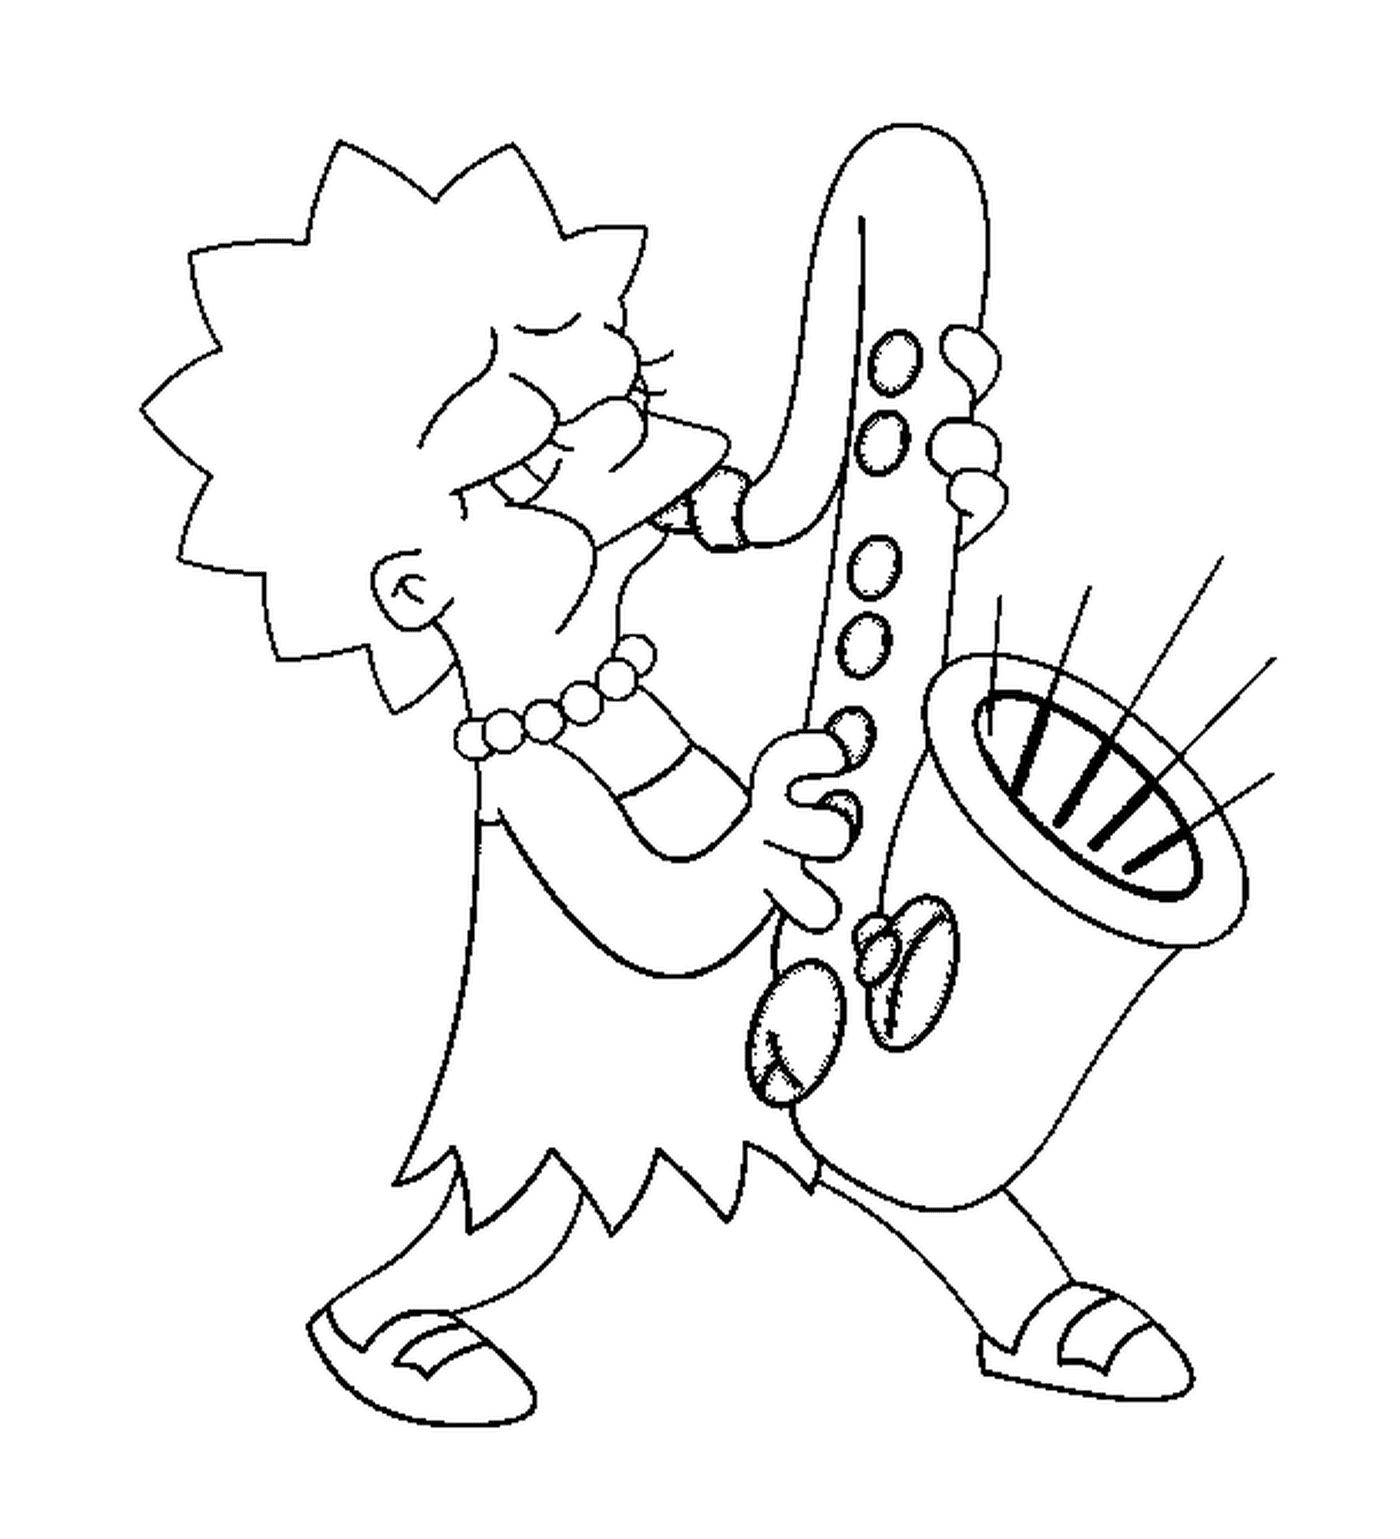  Lisa toca el saxofón armonioso 